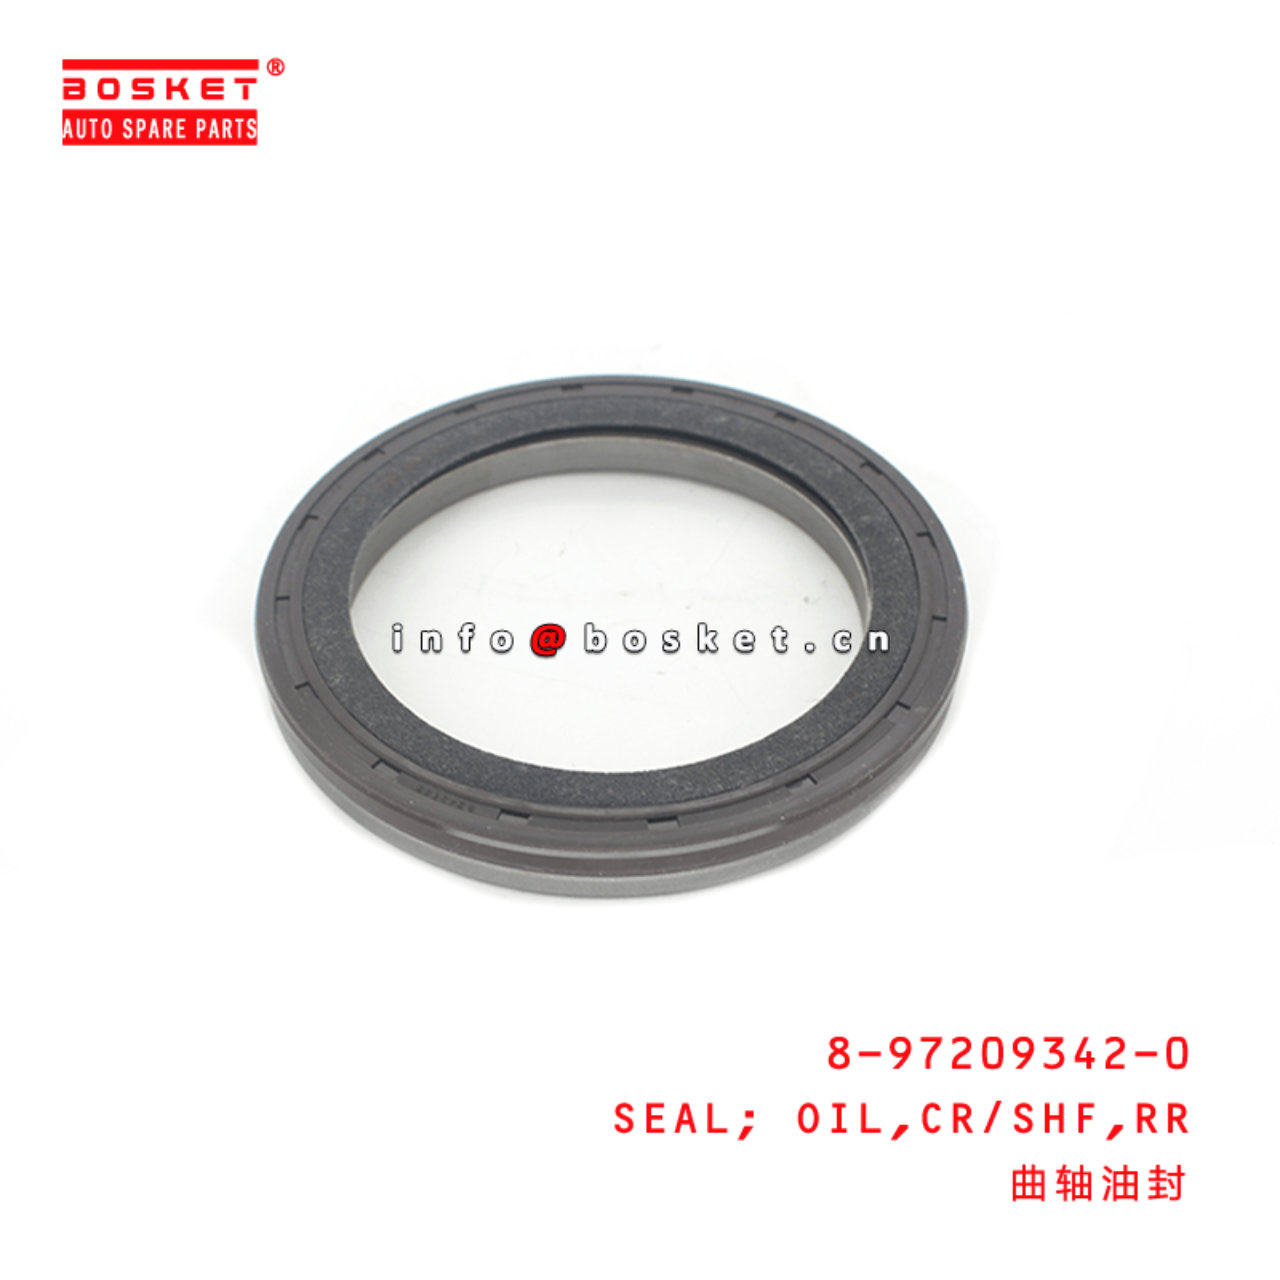 8-97209342-0 Rear Crankshaft Oil Seal 8972093420 Suitable for ISUZU XD 6HK1